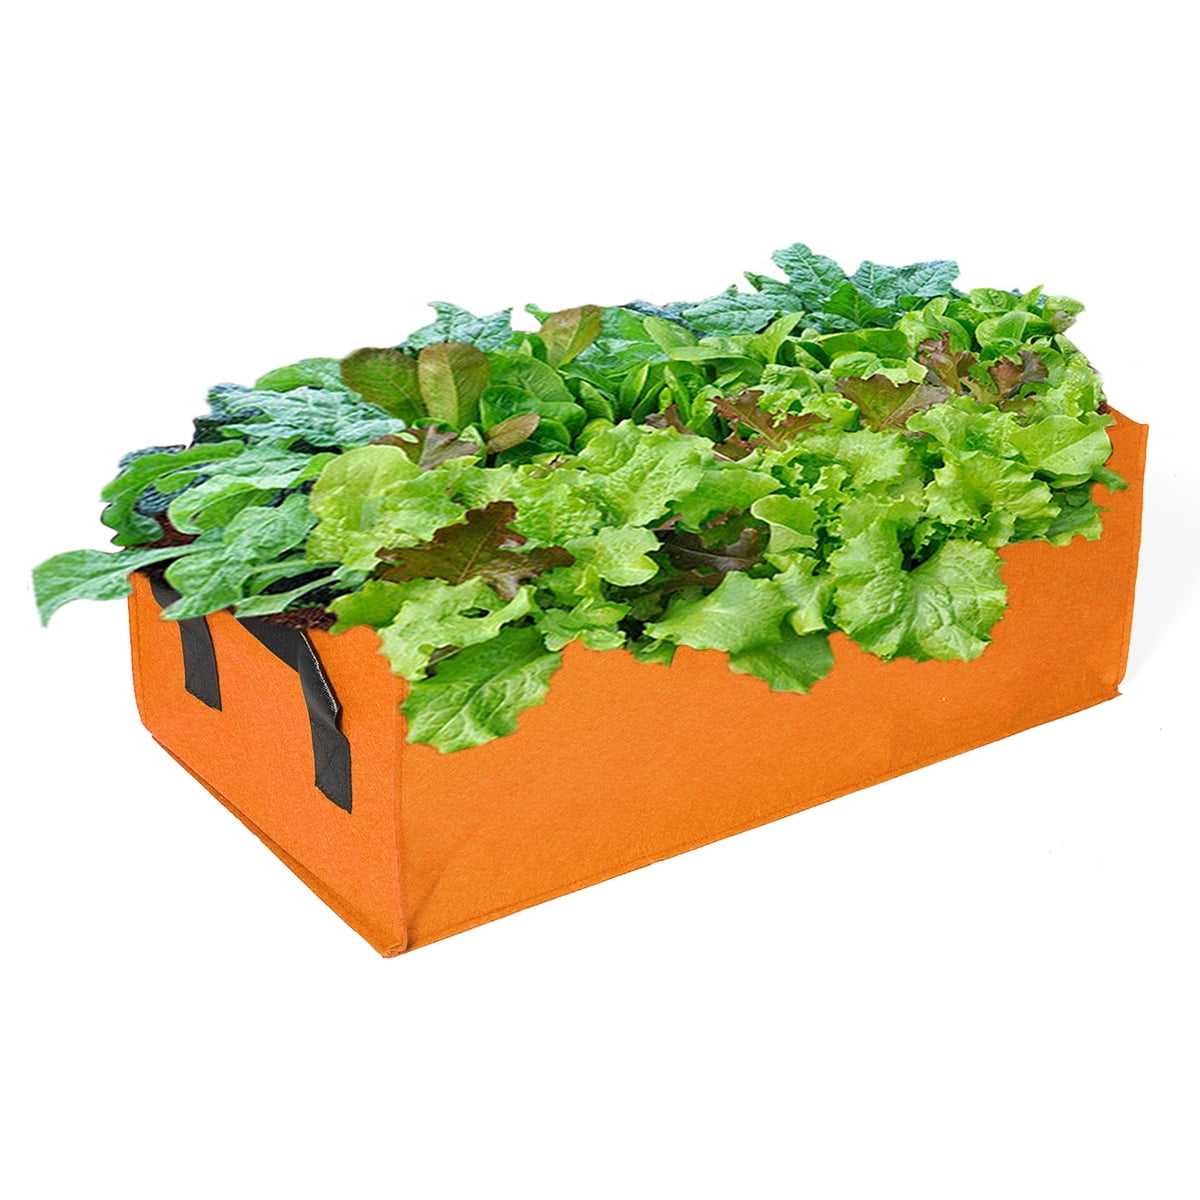 Fabric Plant Container Garden Flower Planter Vegetable Box Grow Bag Pouch Pot S 